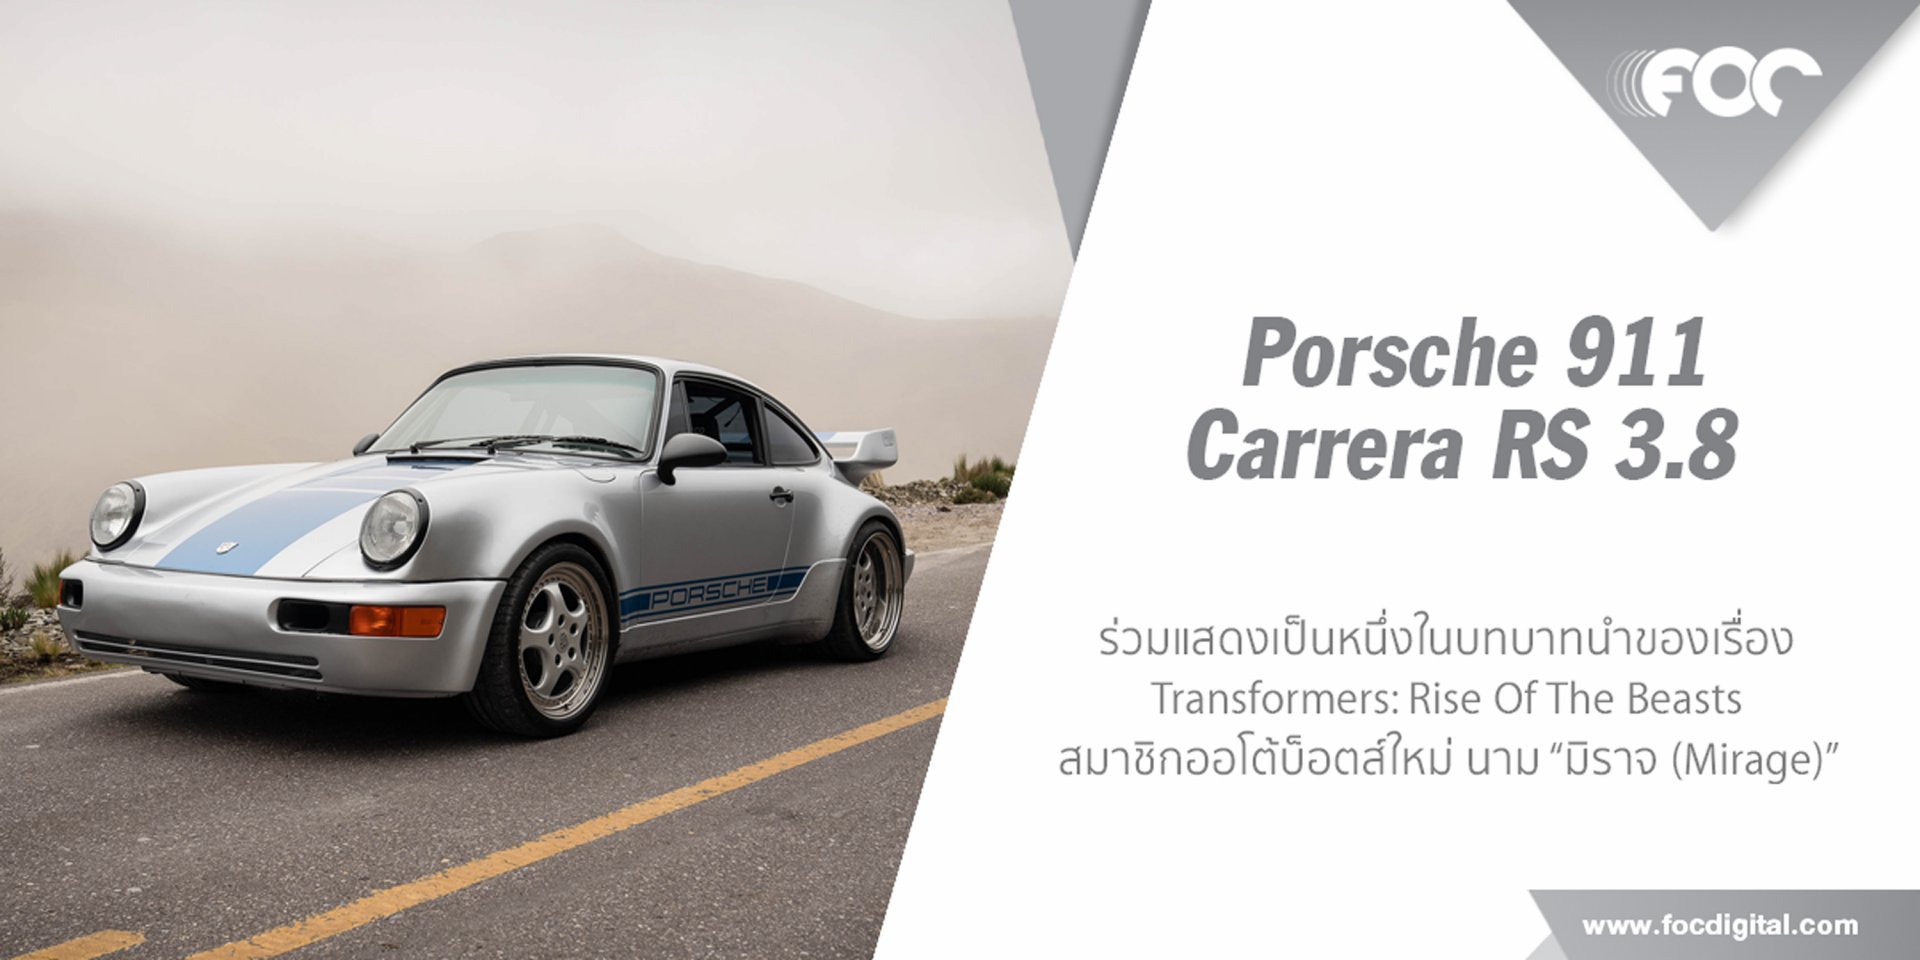 Porsche 911 Carrera RS 3.8 ฮีโร่ใหม่ Transformers: Rise Of The Beasts